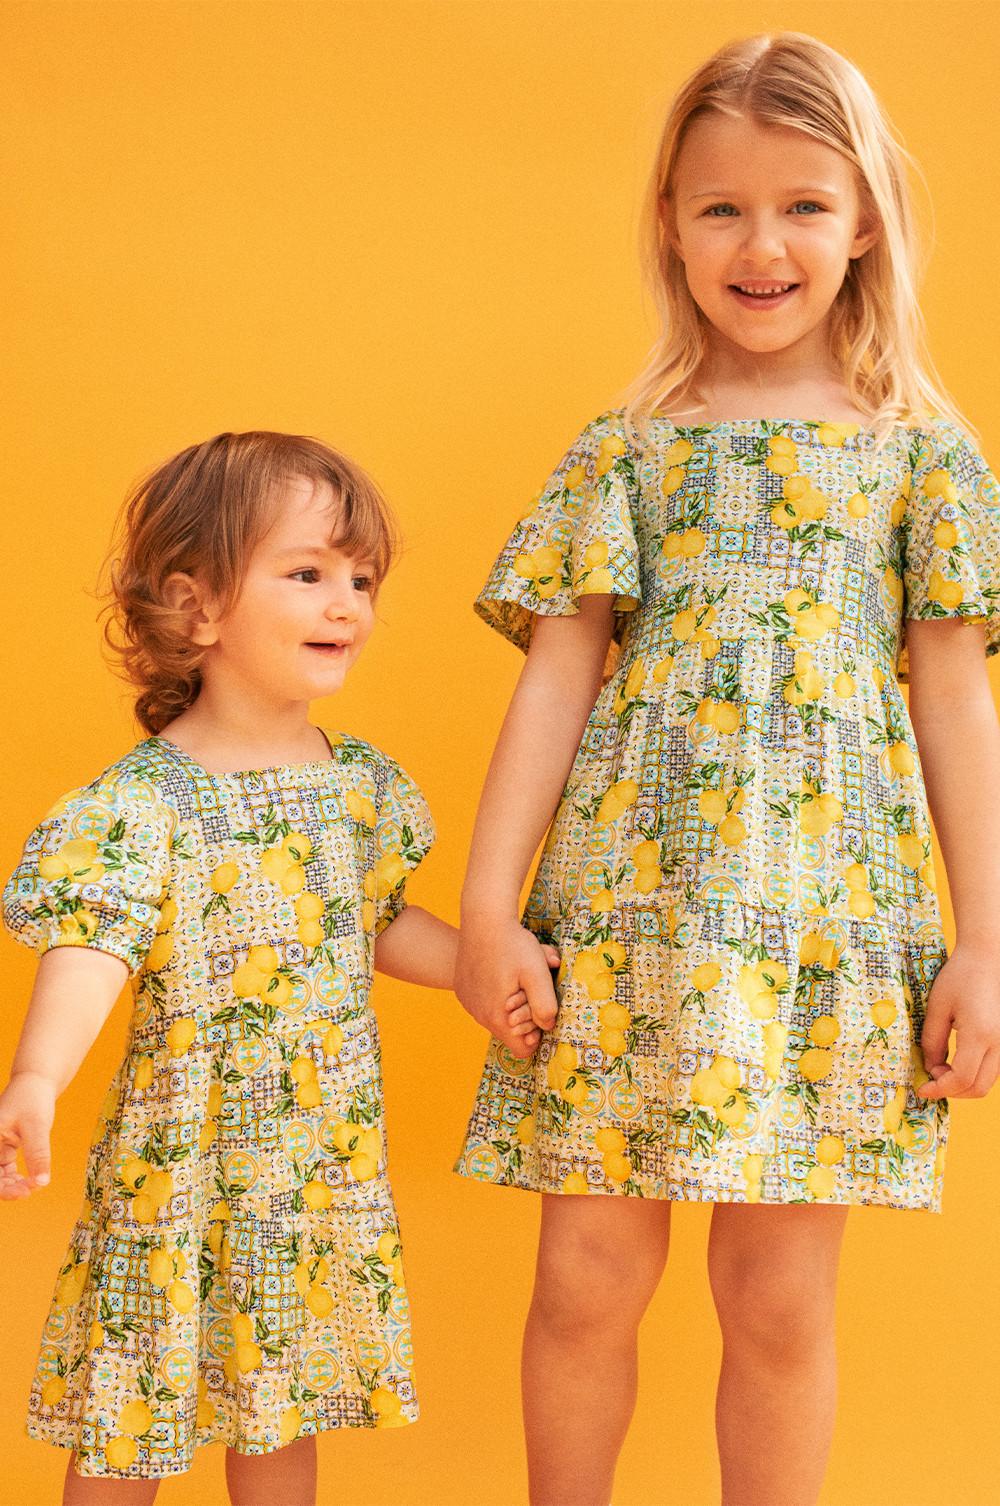 Kids wear matching lemon print dresses